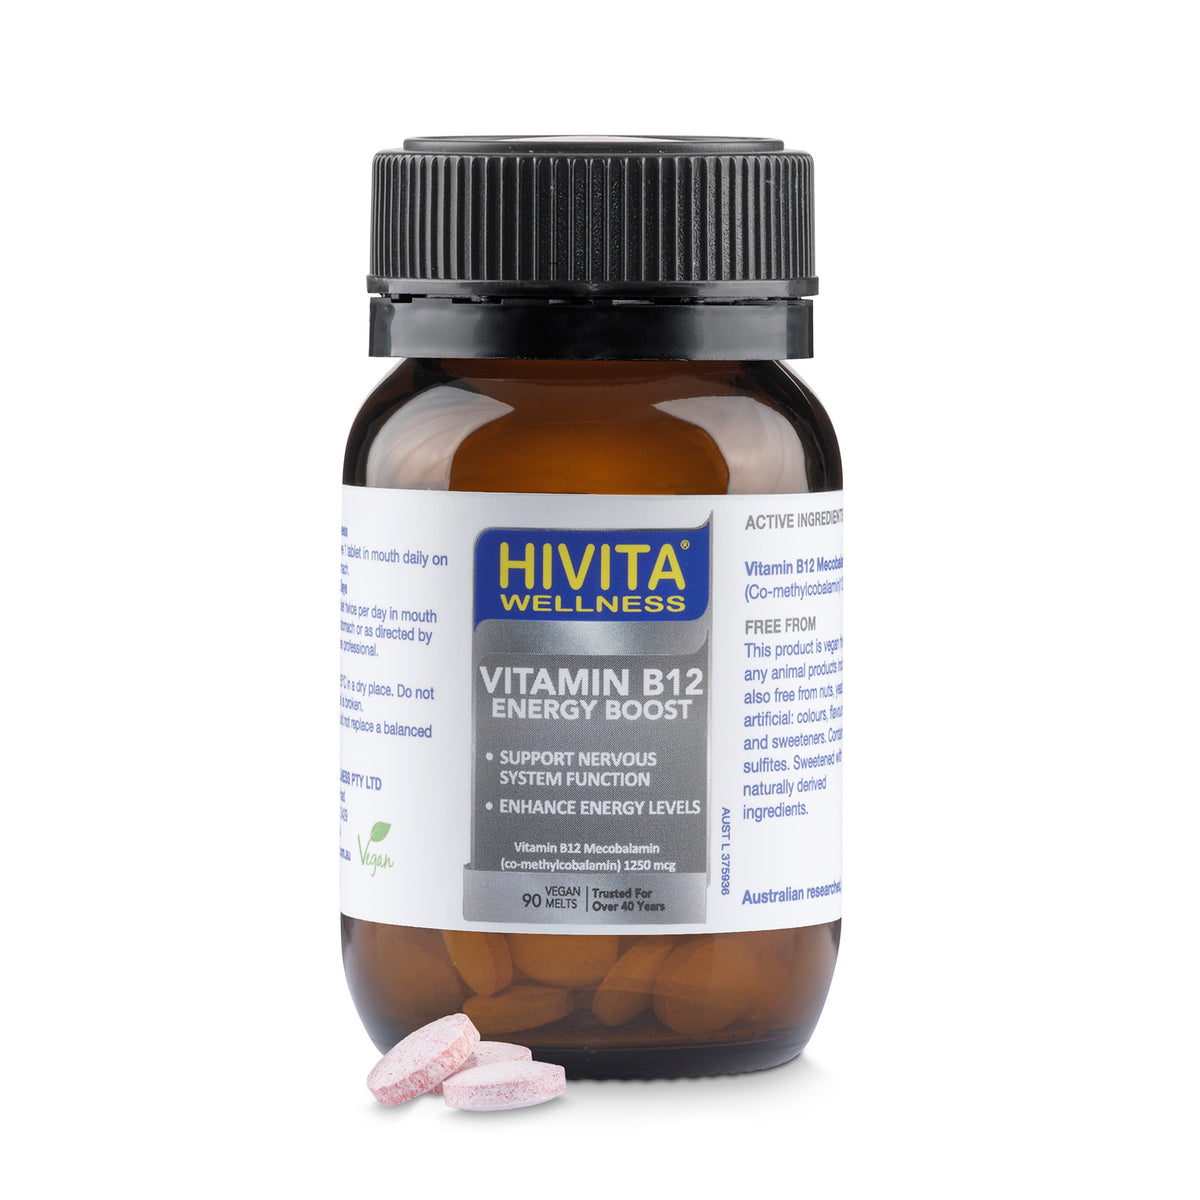 HIVITA Wellness Vitamin B12 Energy Boost 90 capsules